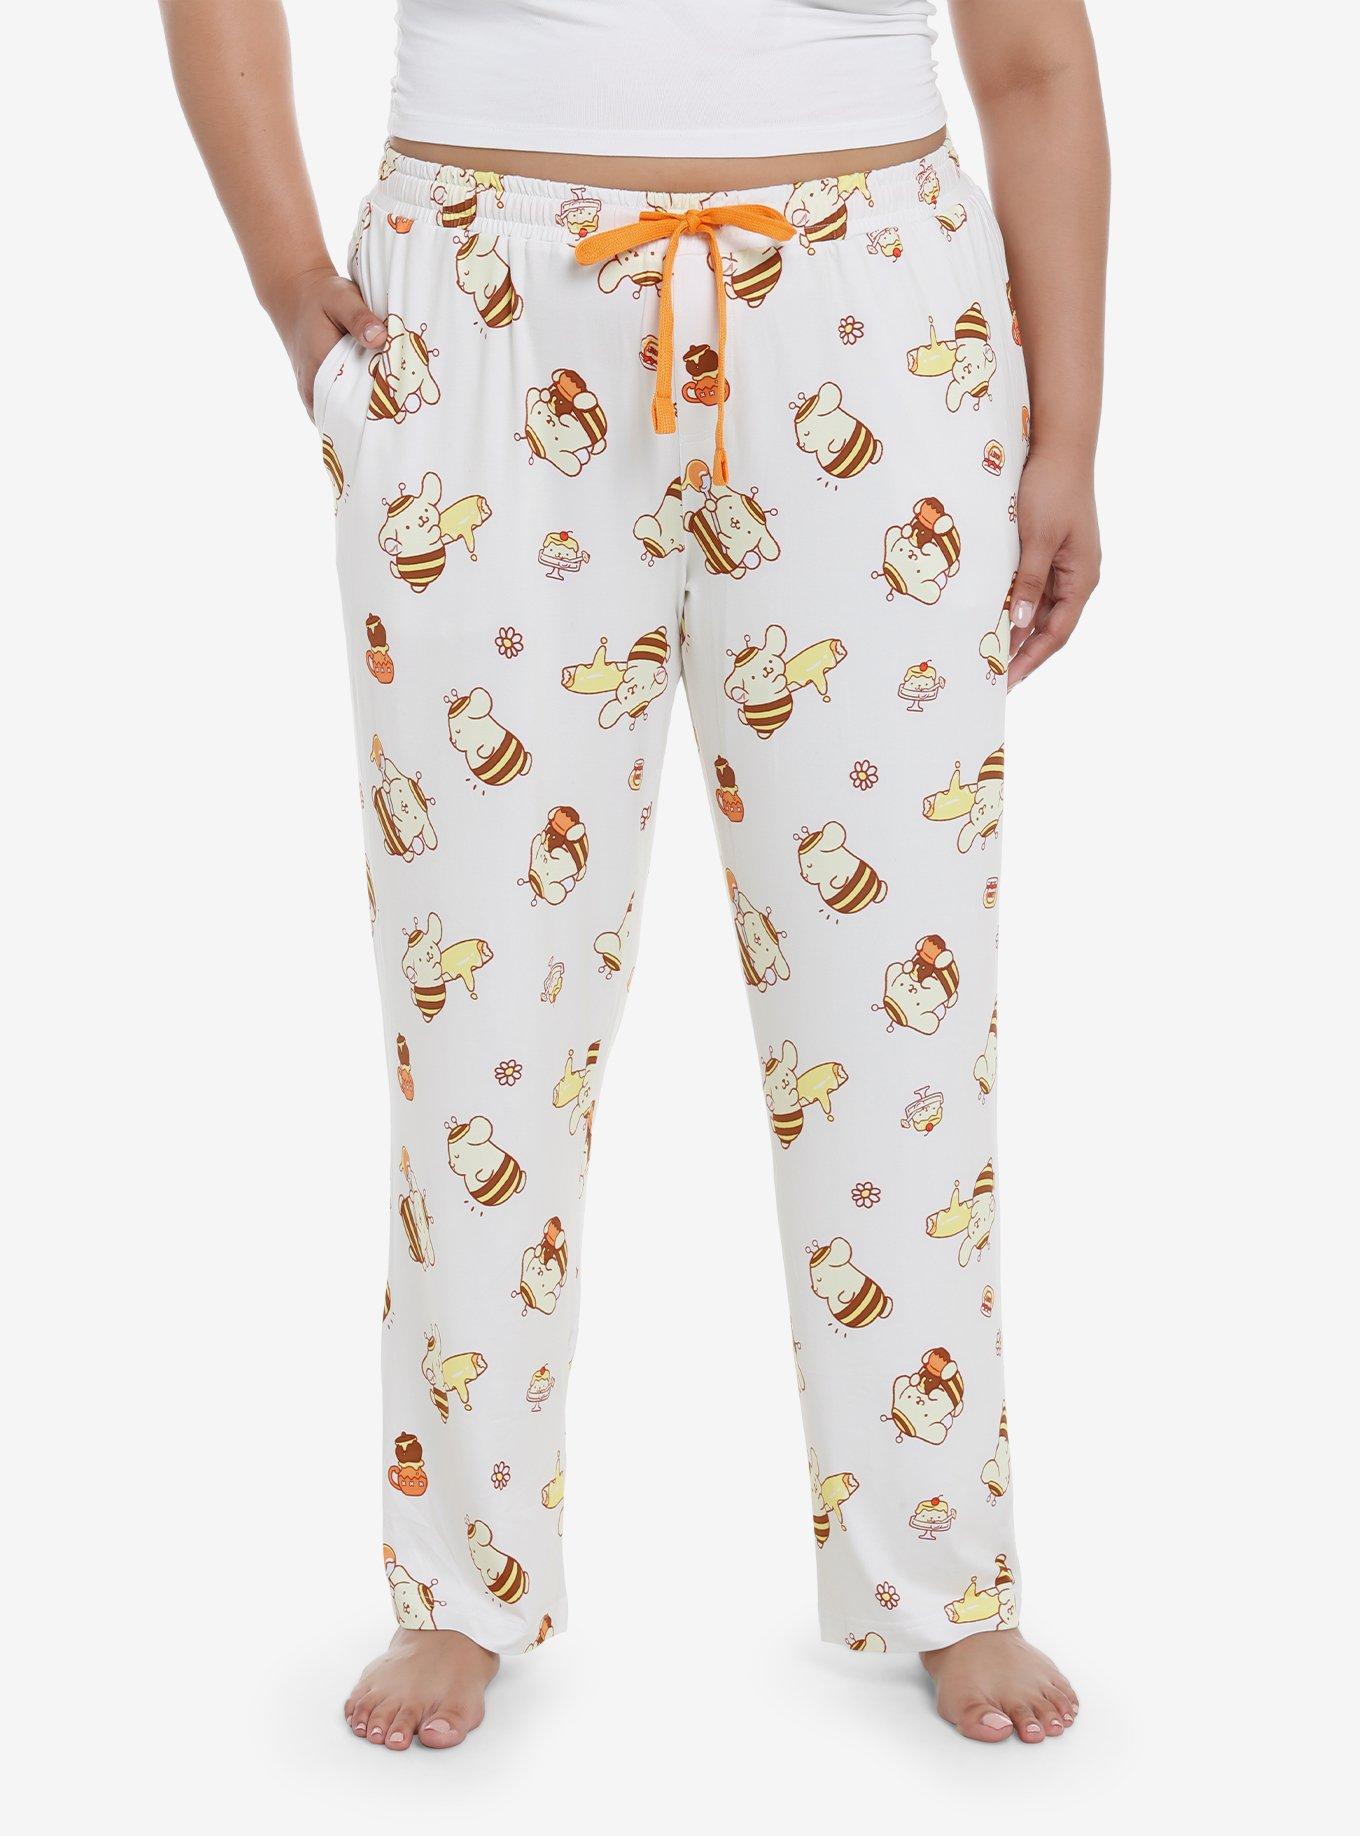 Pompompurin Honeybee Pastries Girls Pajama Pants Plus Size | Hot Topic